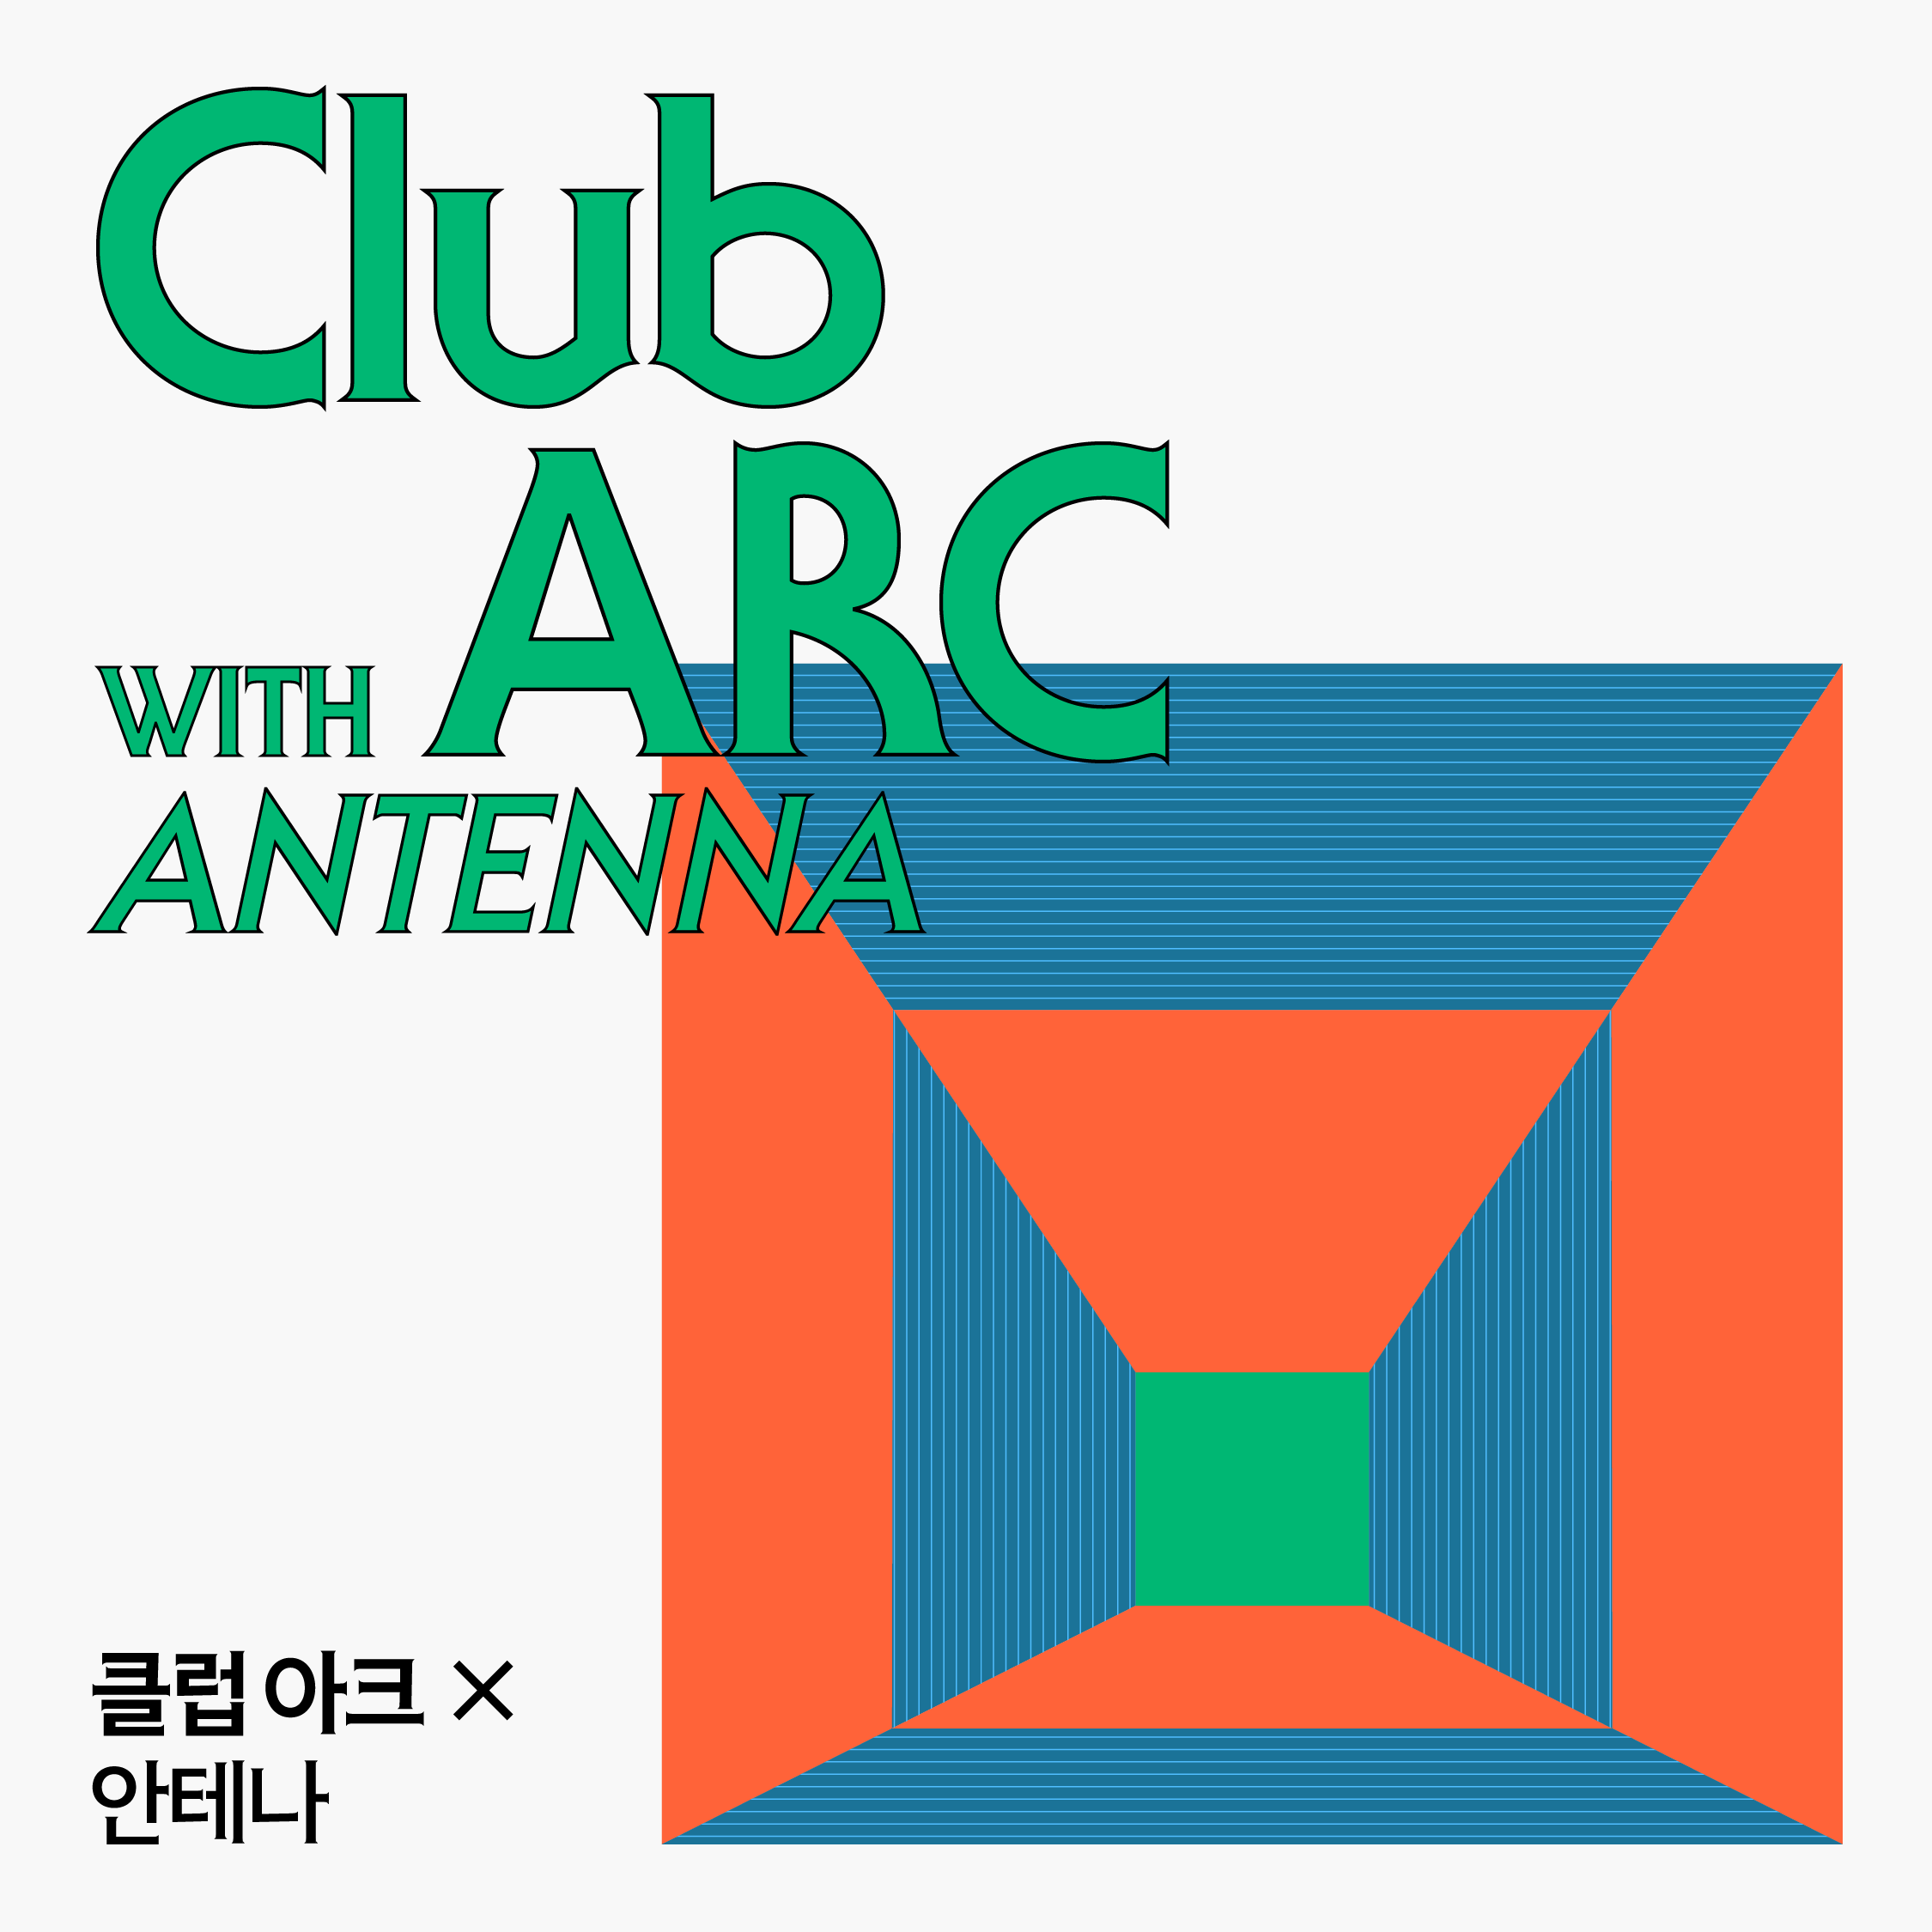 LG Arts Center SEOUL > Club ARC